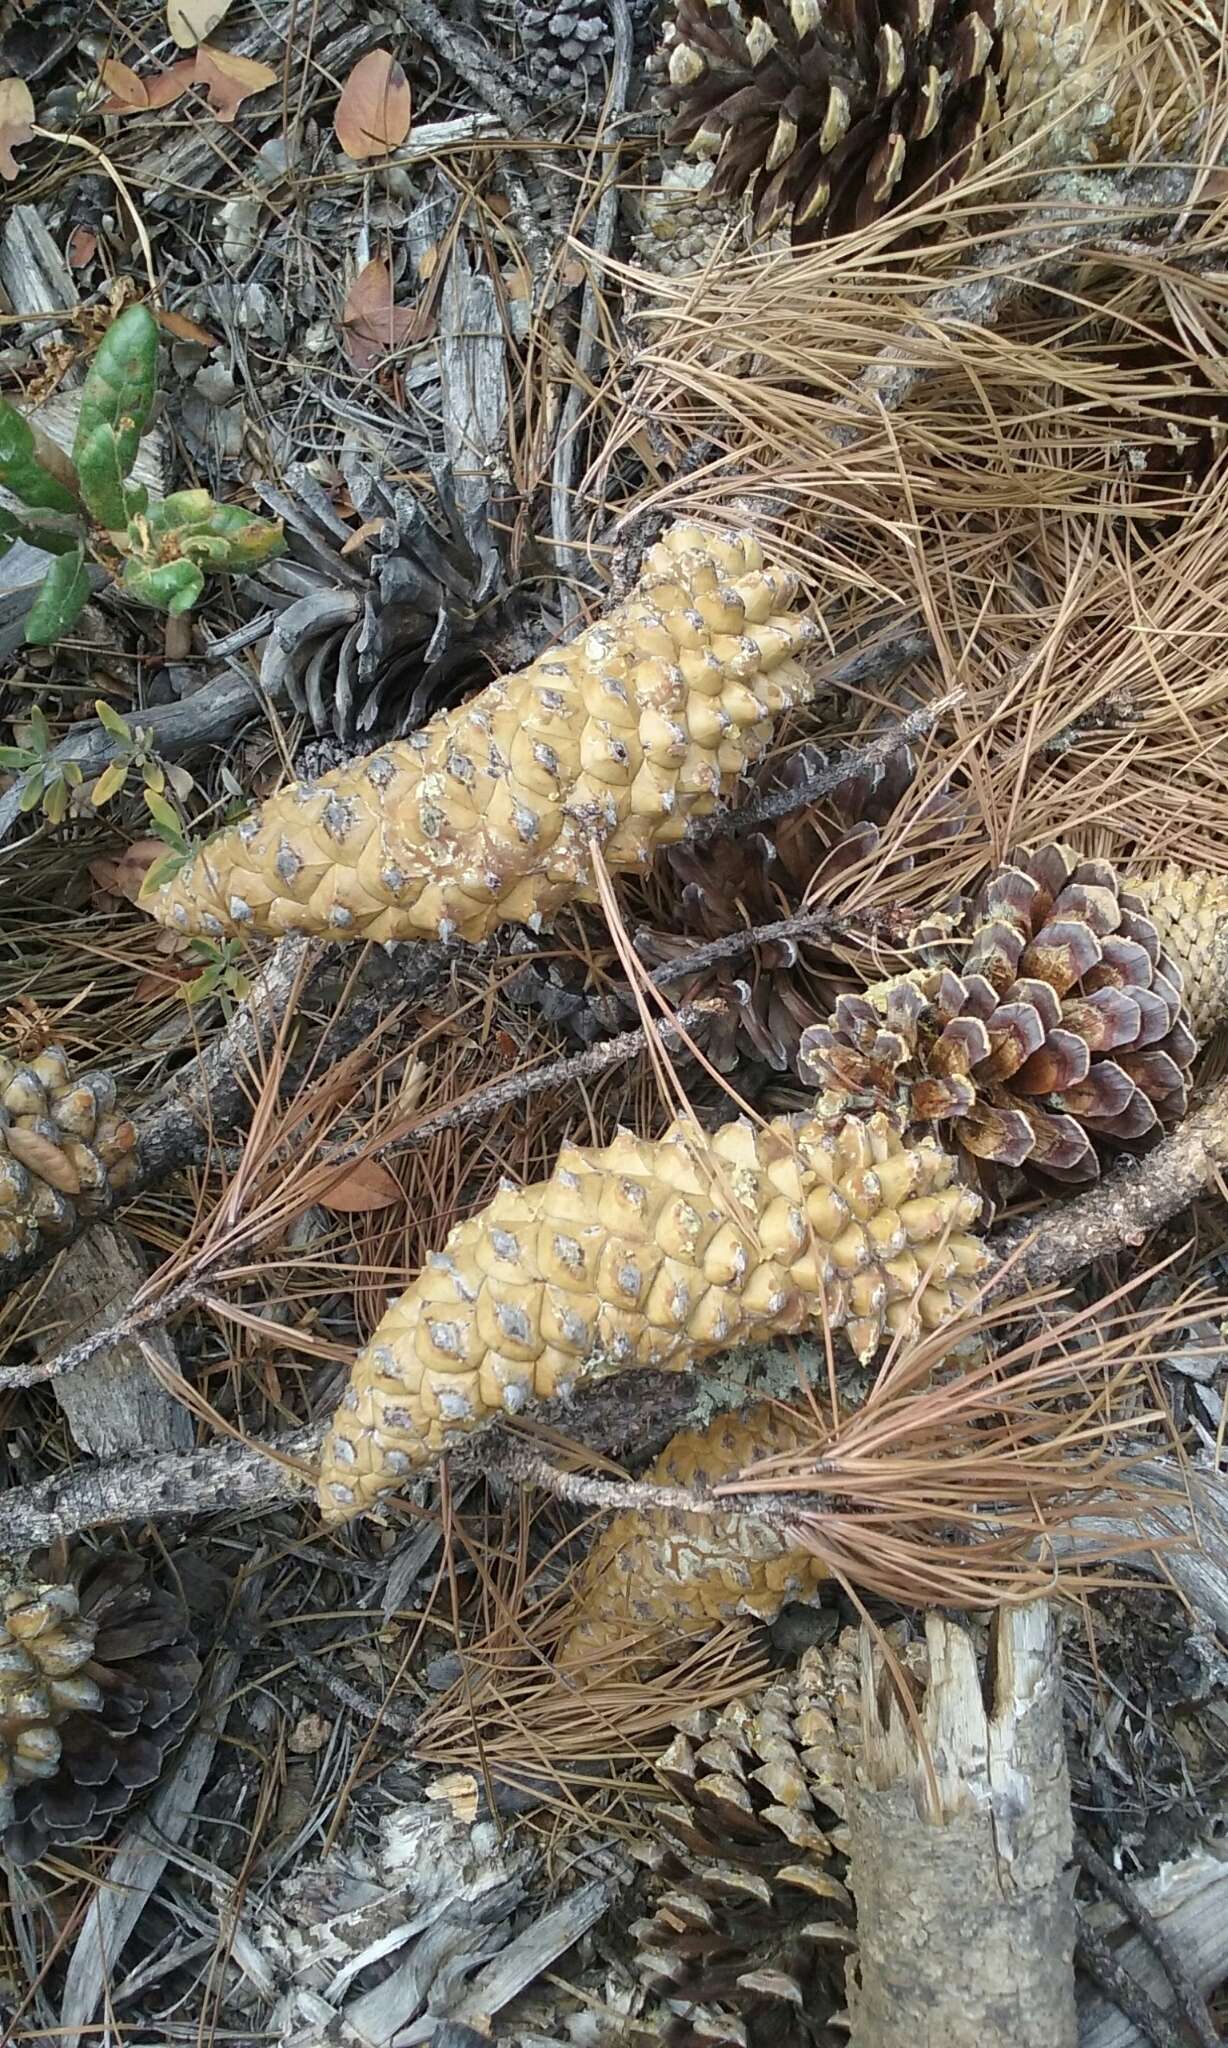 Image of knobcone pine